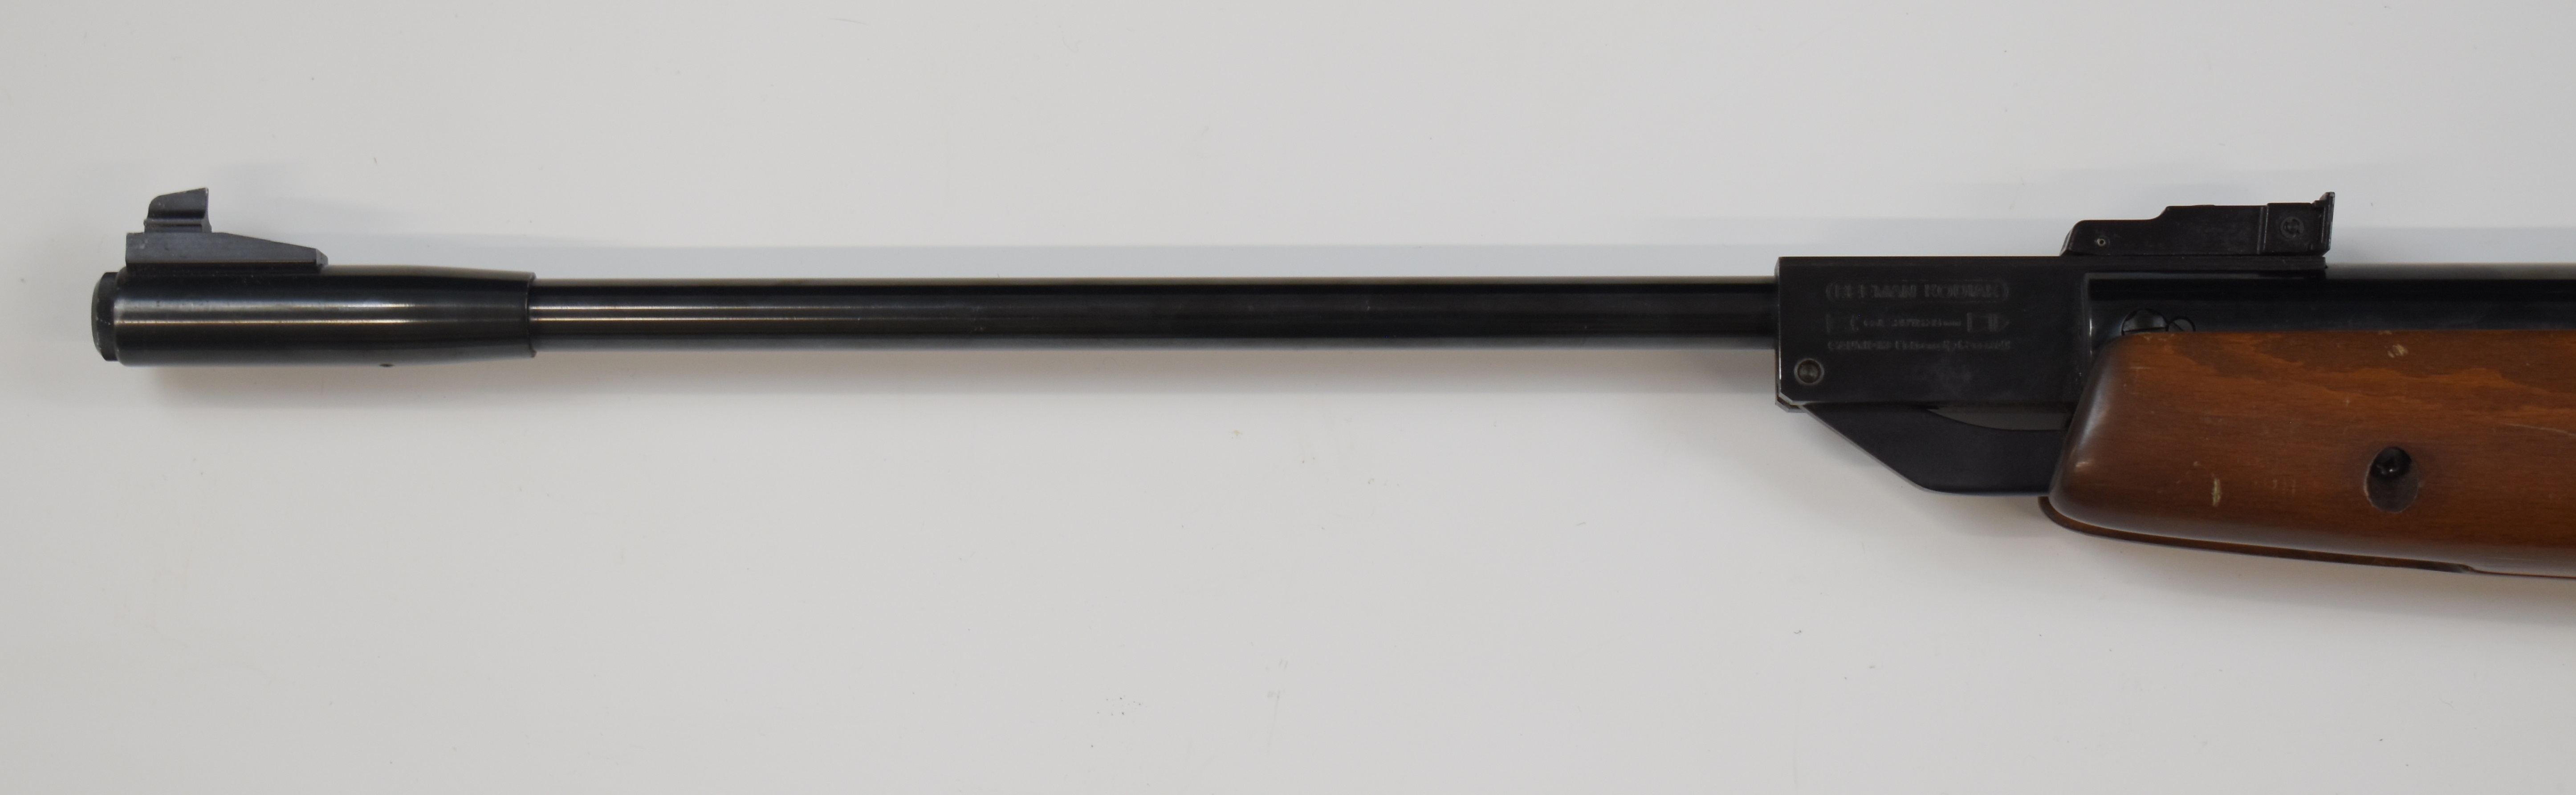 Beeman Kodiak .25 FAC air rifle with chequered semi-pistol grip, raised cheek piece, adjustable - Image 9 of 10